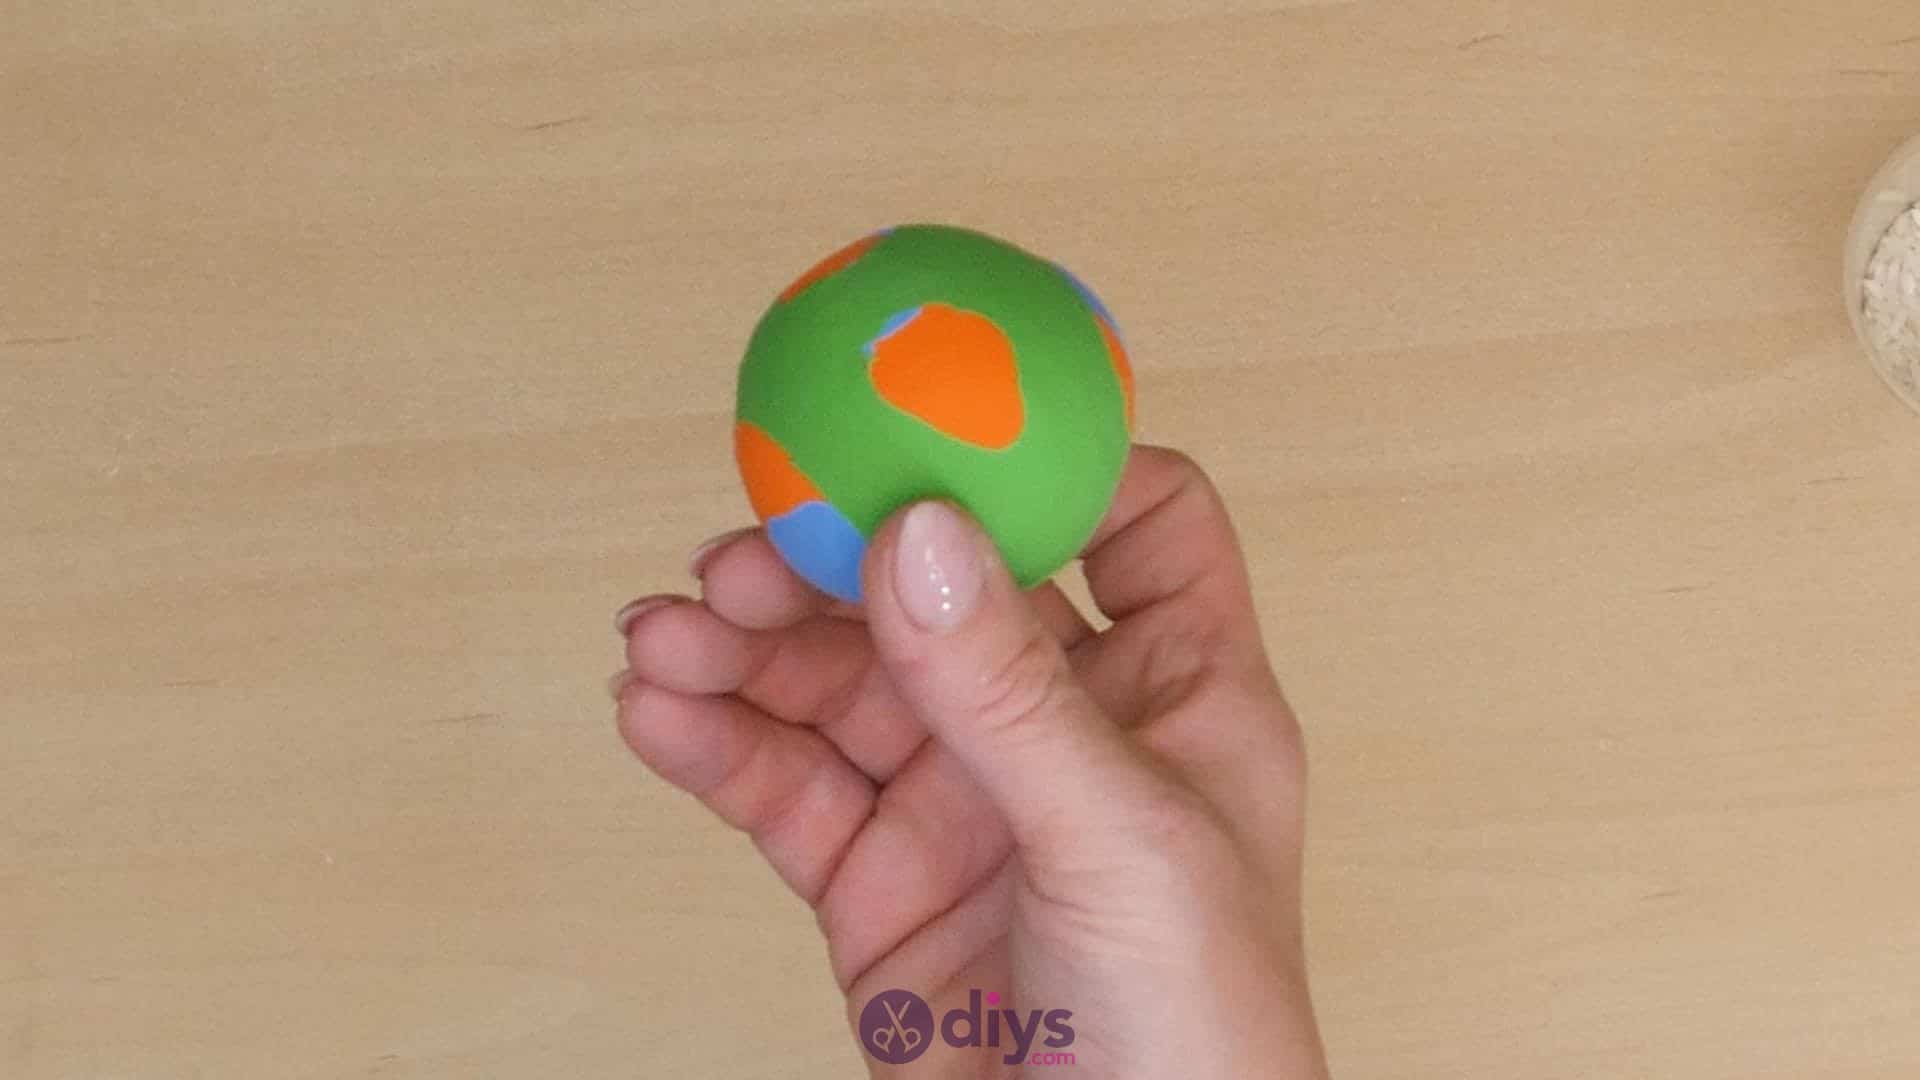 Diy juggling balls step 6